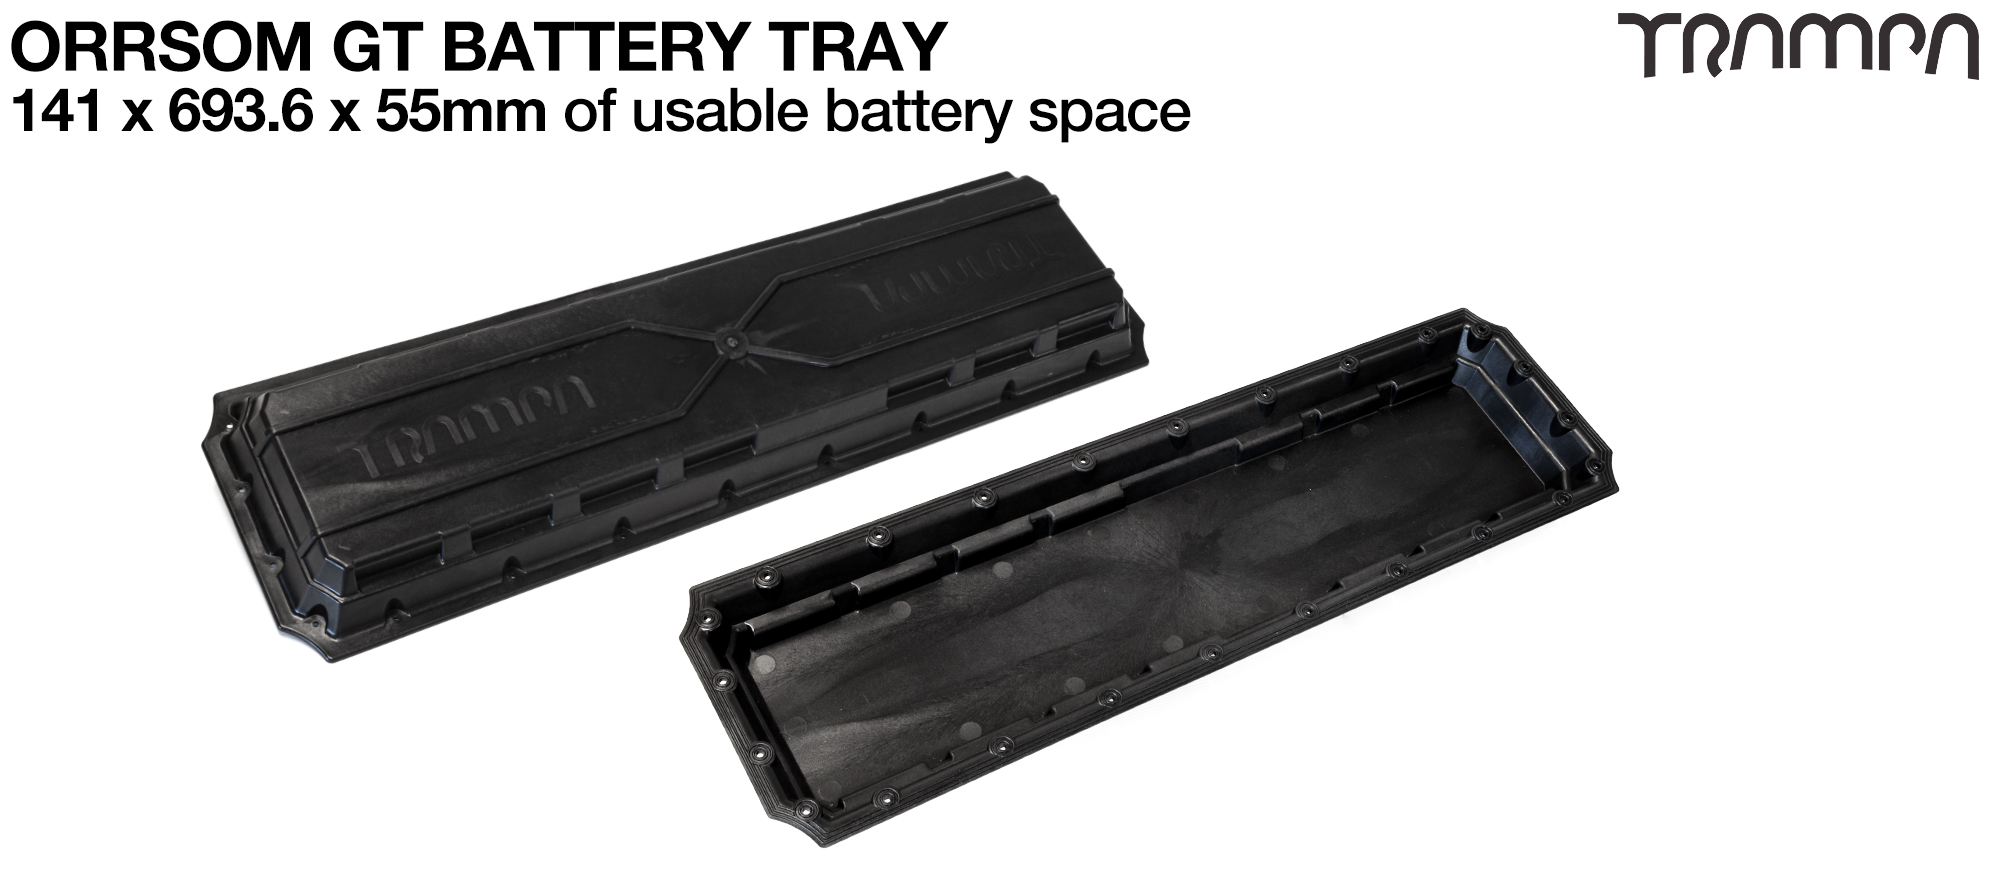 ORRSOM GT Longboard Underboard Battery Tray - Capable of housing 12s6p